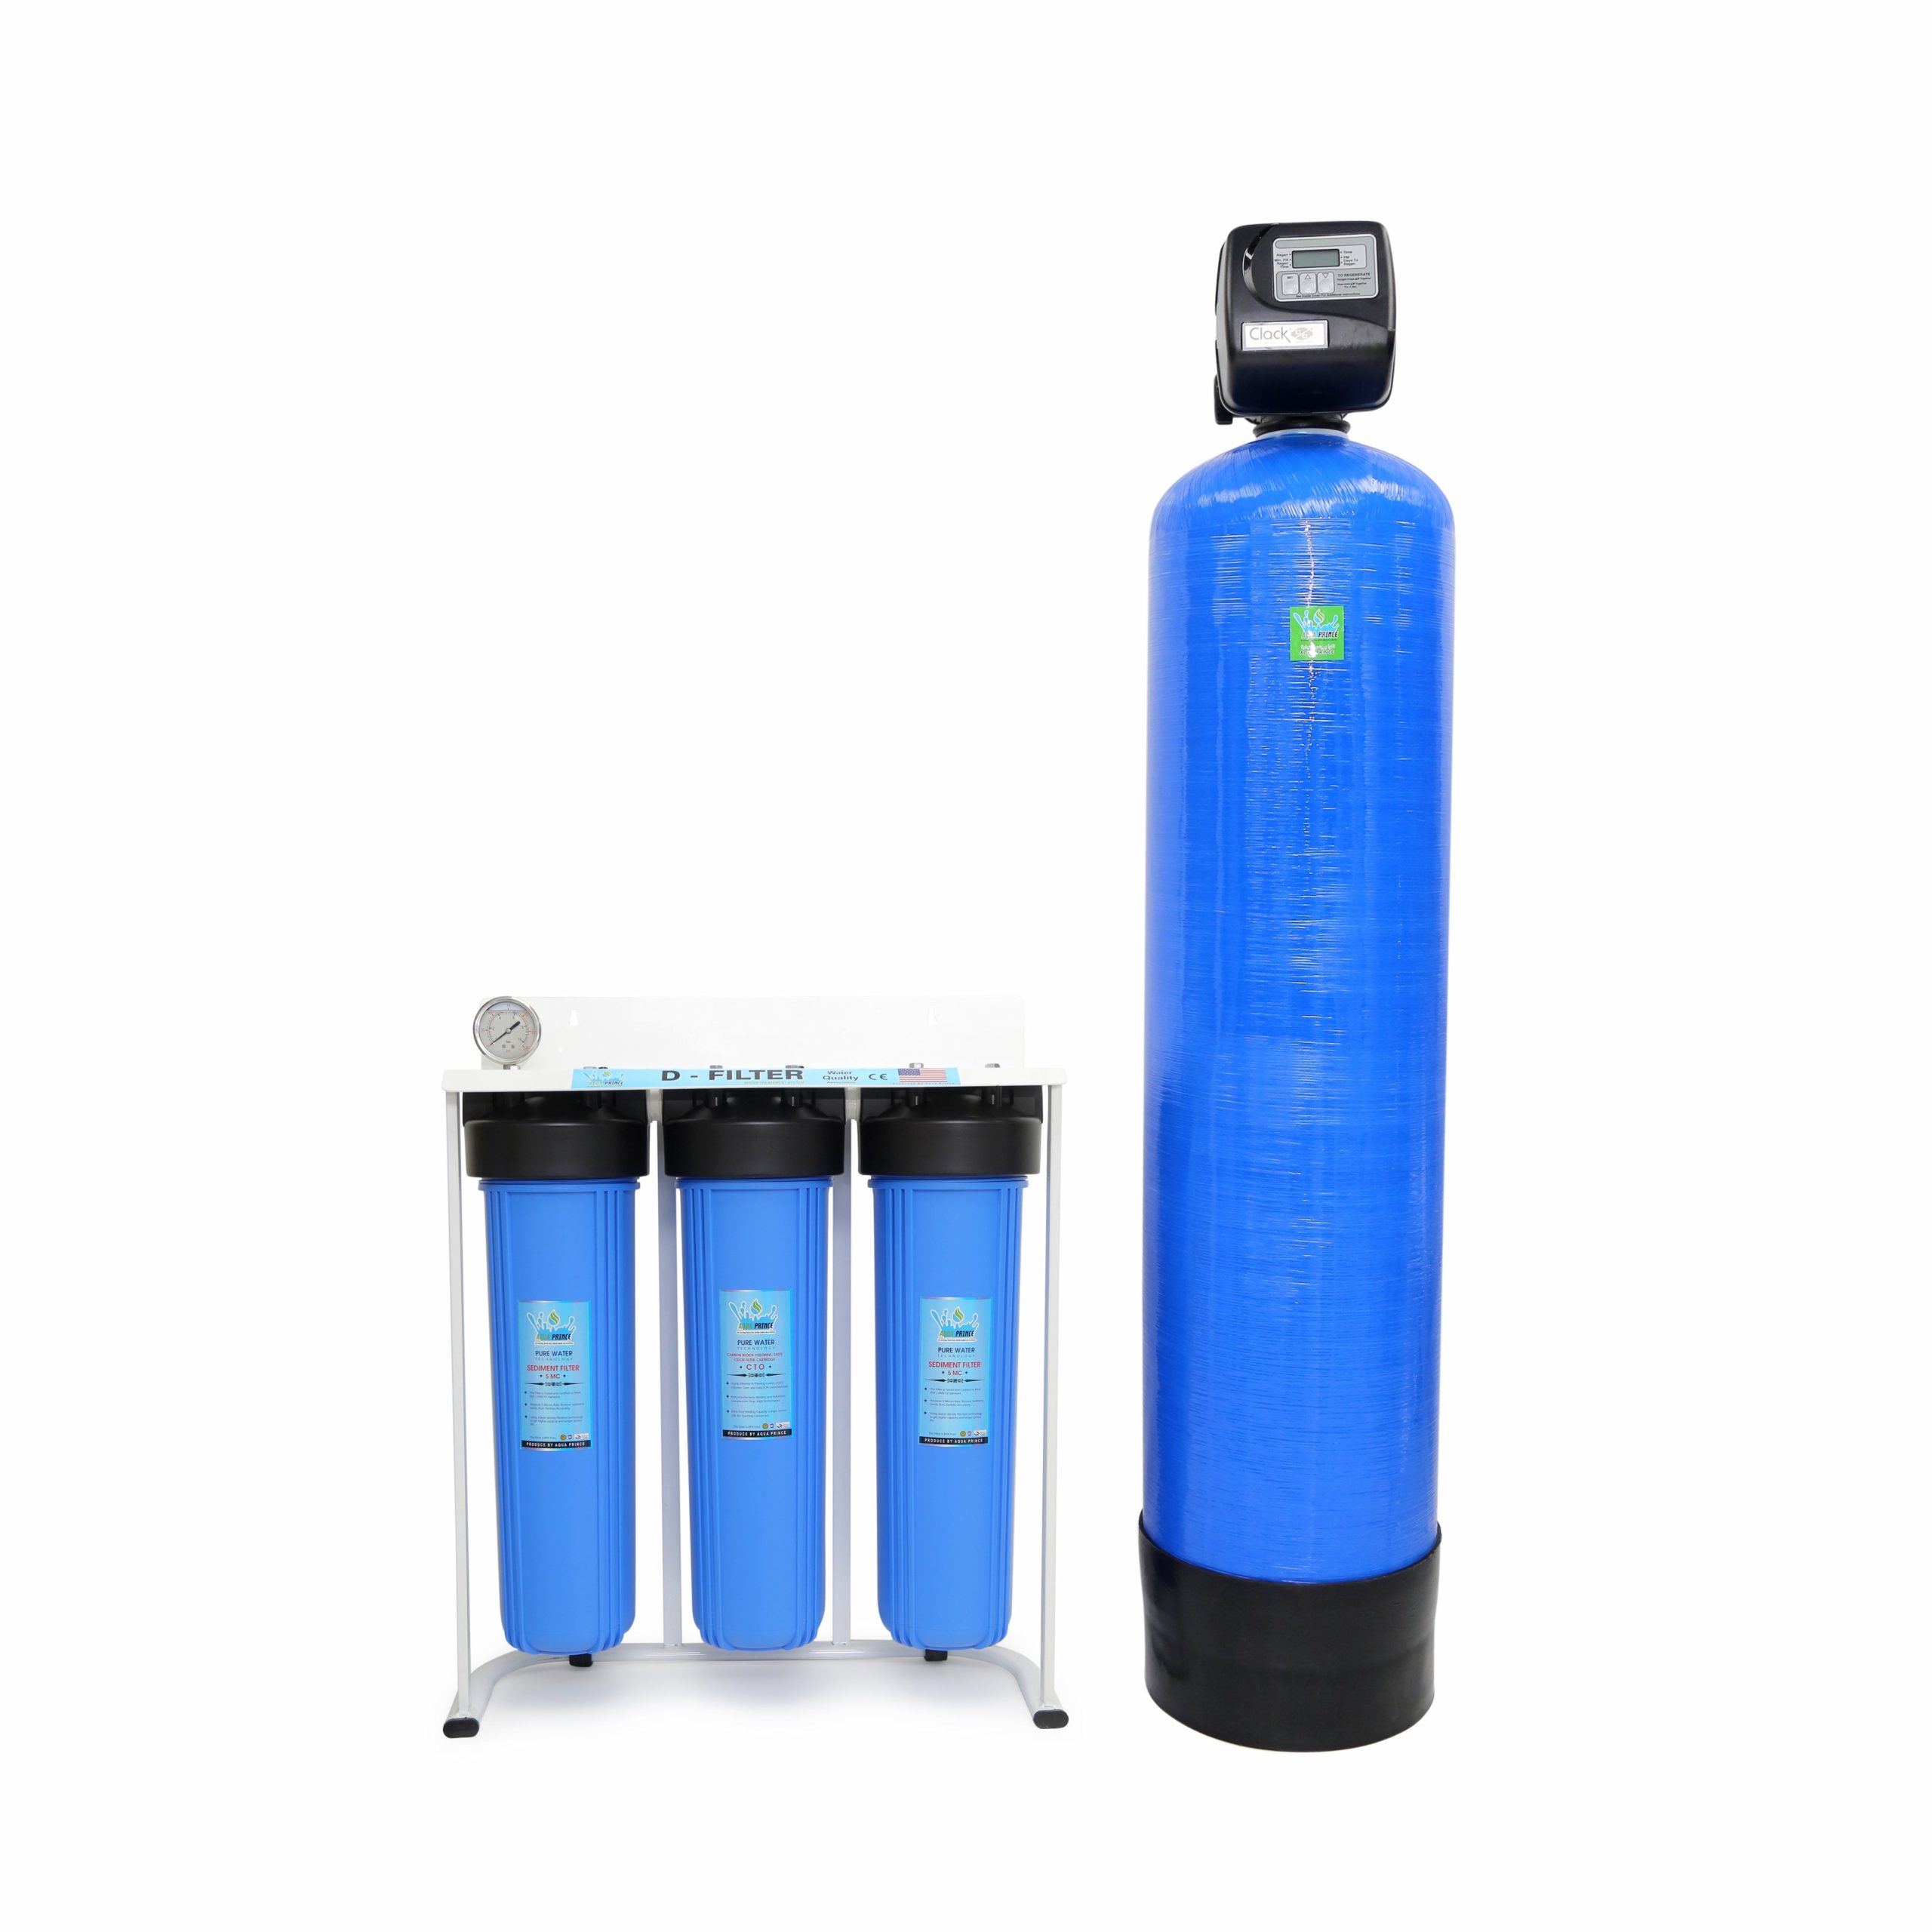 3 Stage Jumbo Multimedia Water Filter